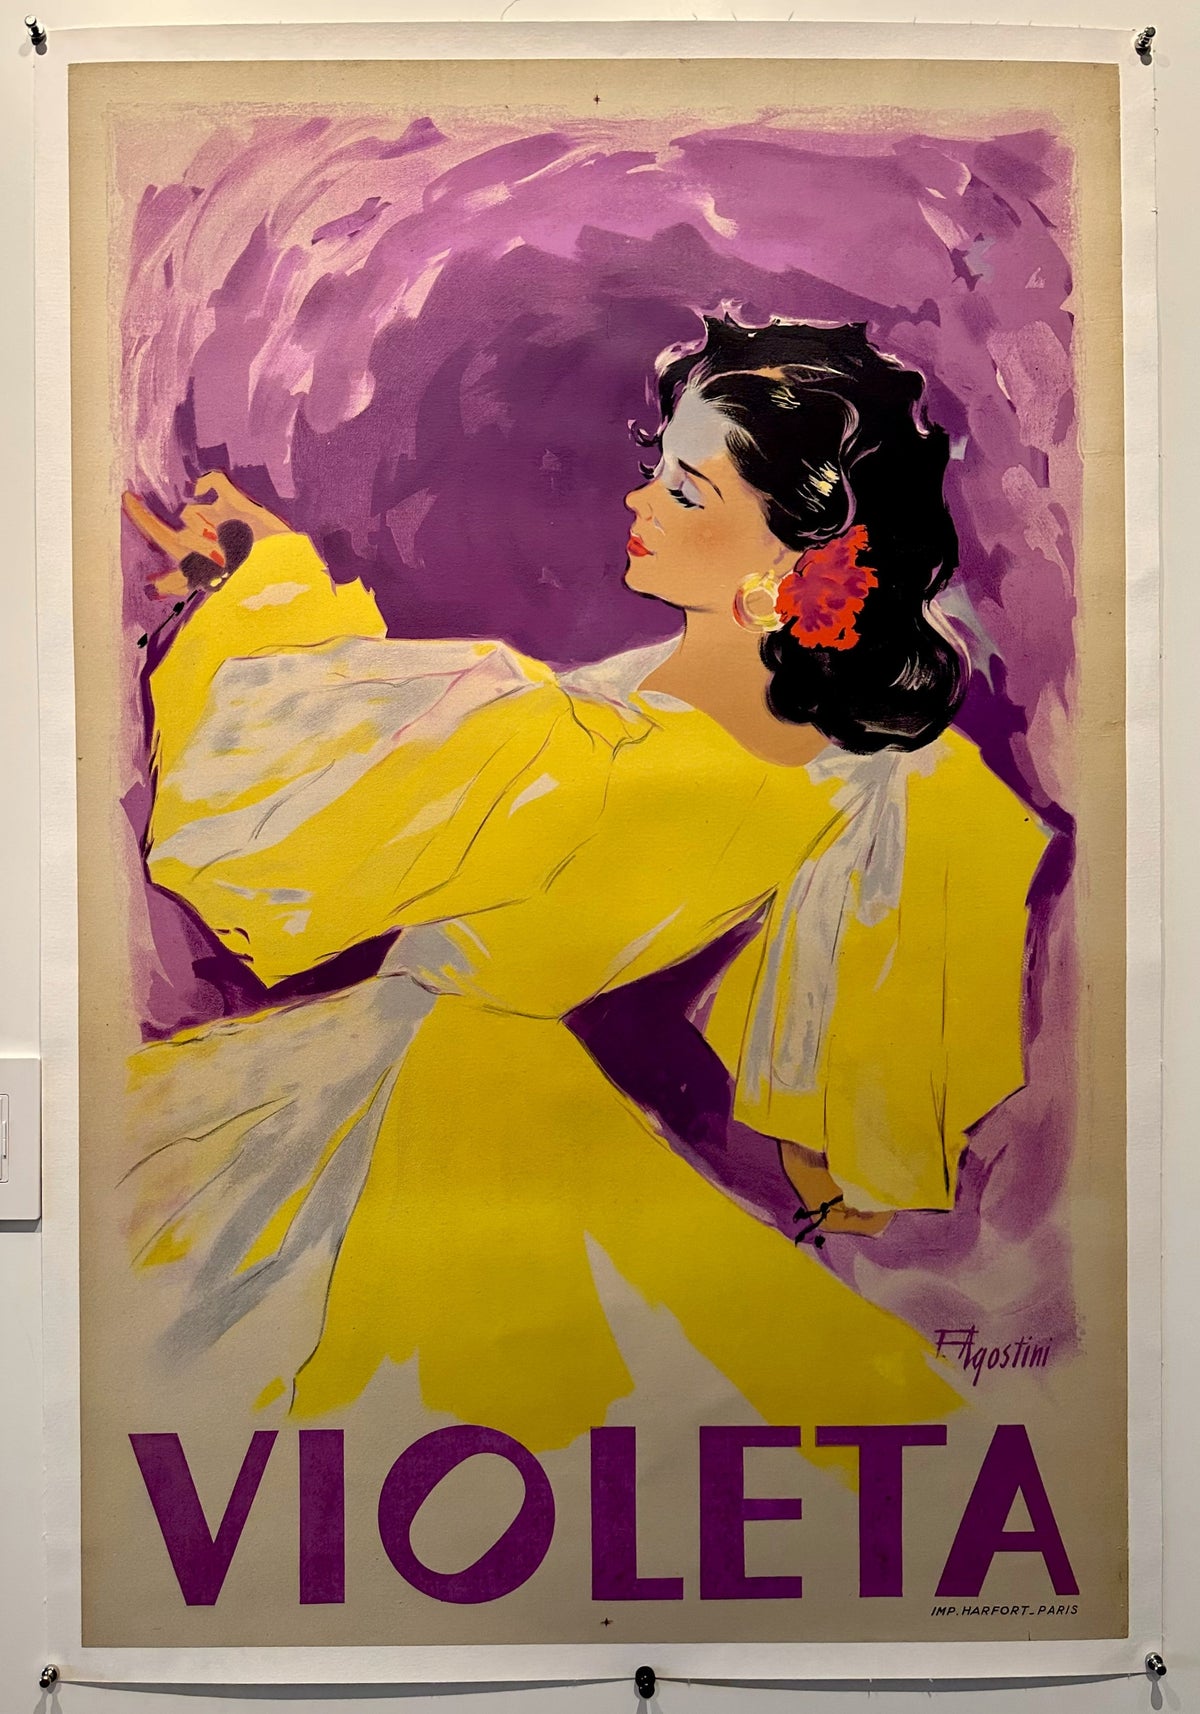 Violeta Perfume by Agostini - Authentic Vintage Poster